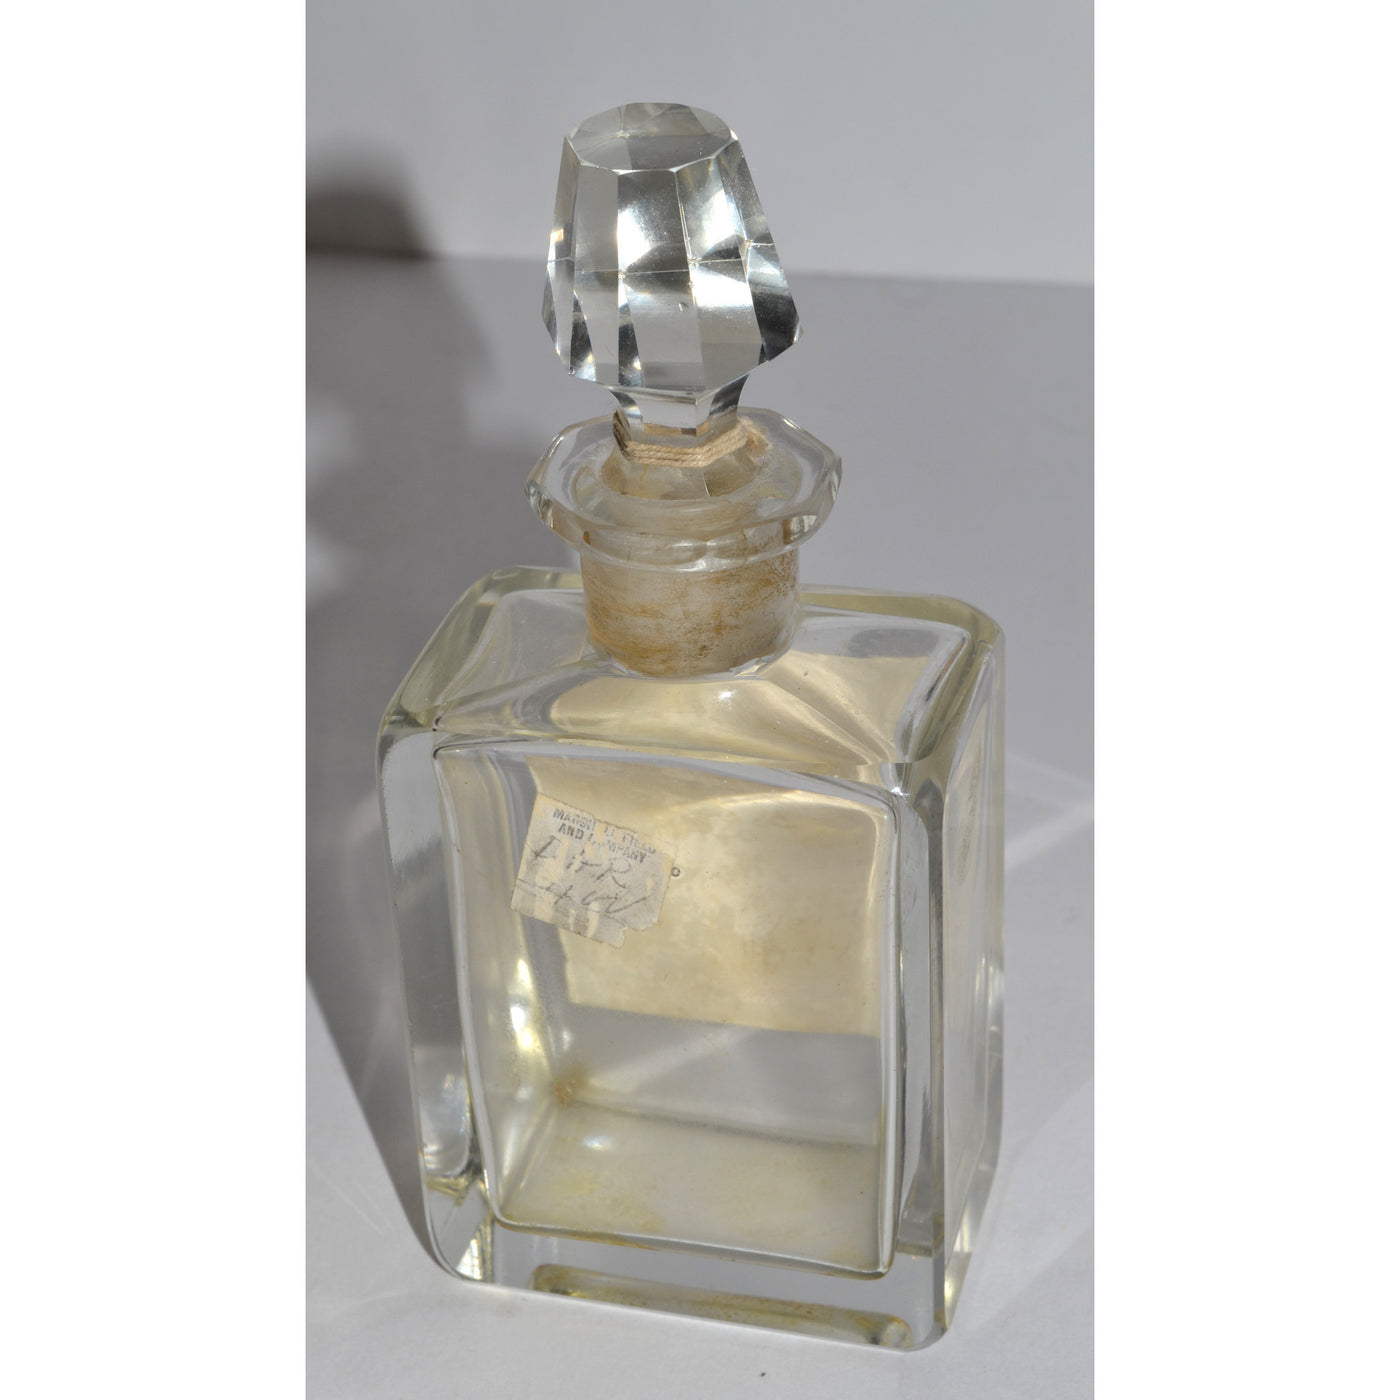 Vintage English Violets Crystal Perfume Bottle By Floris 